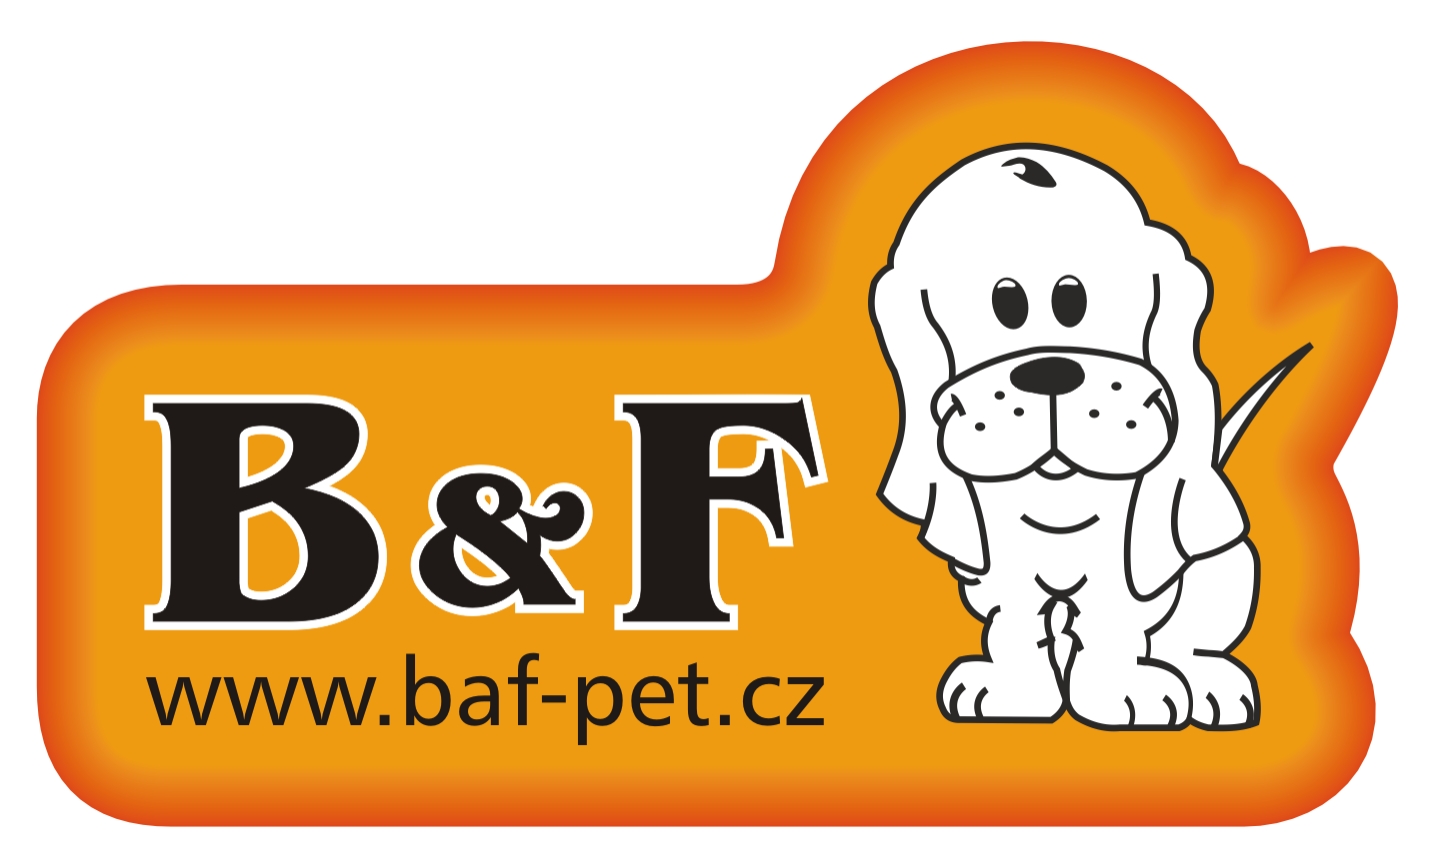 www.baf-pet.cz